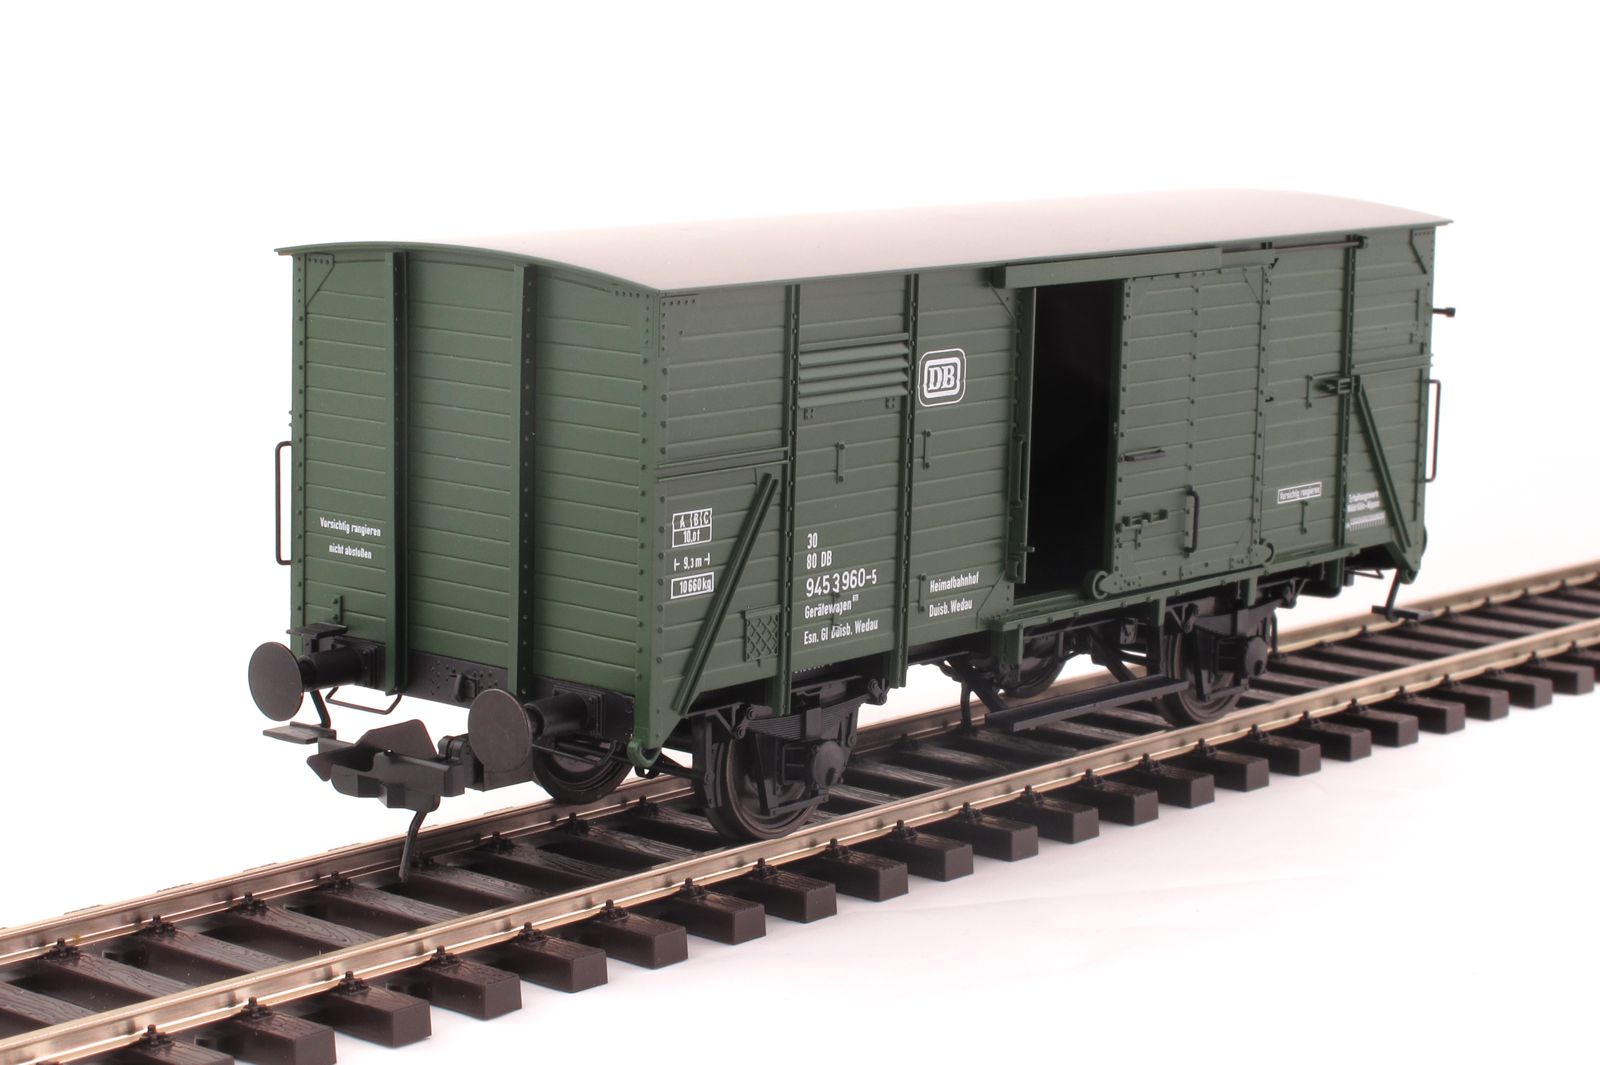 DB gedeckter GüterWagen G10 Ep.4; Gerätewagen, Betriebsnummer: 30 80 945 3 960-5